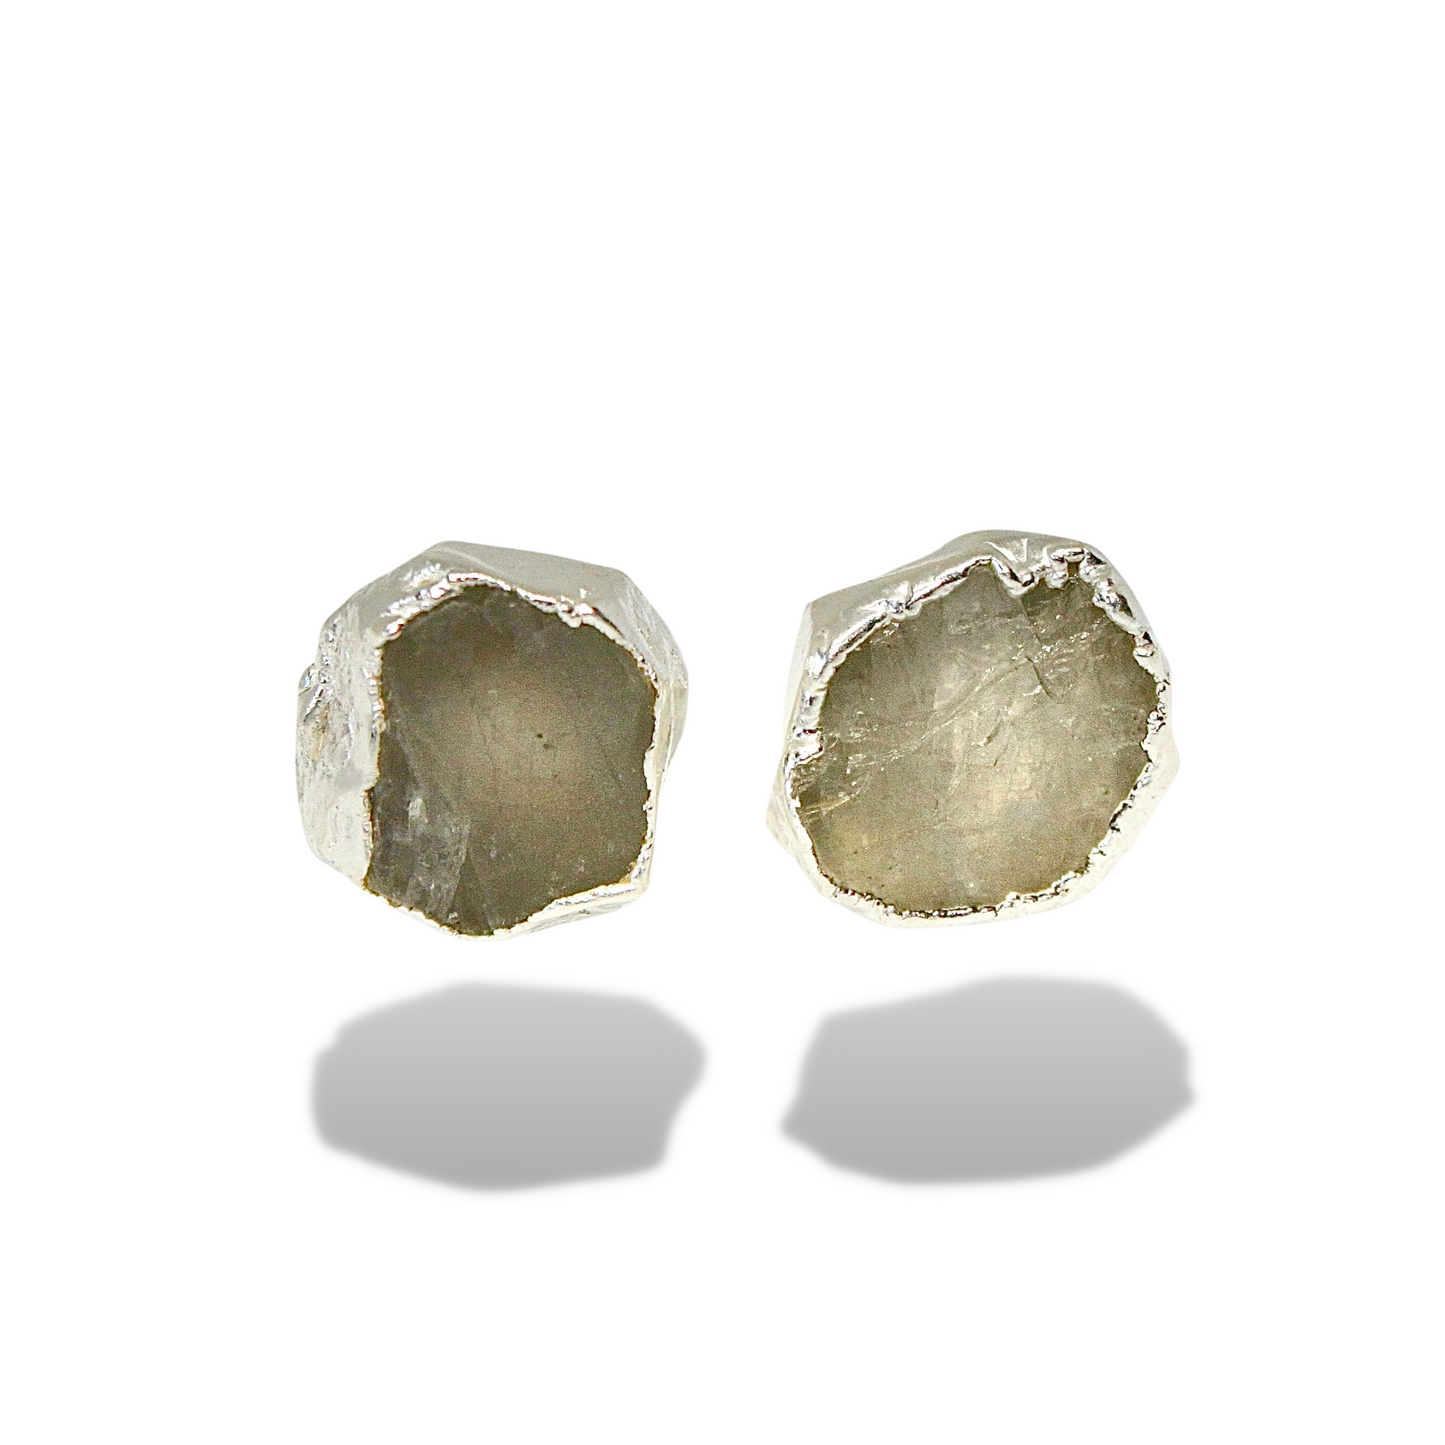 Raw Herkimer Diamond Handmade Earrings in Sterling Silver